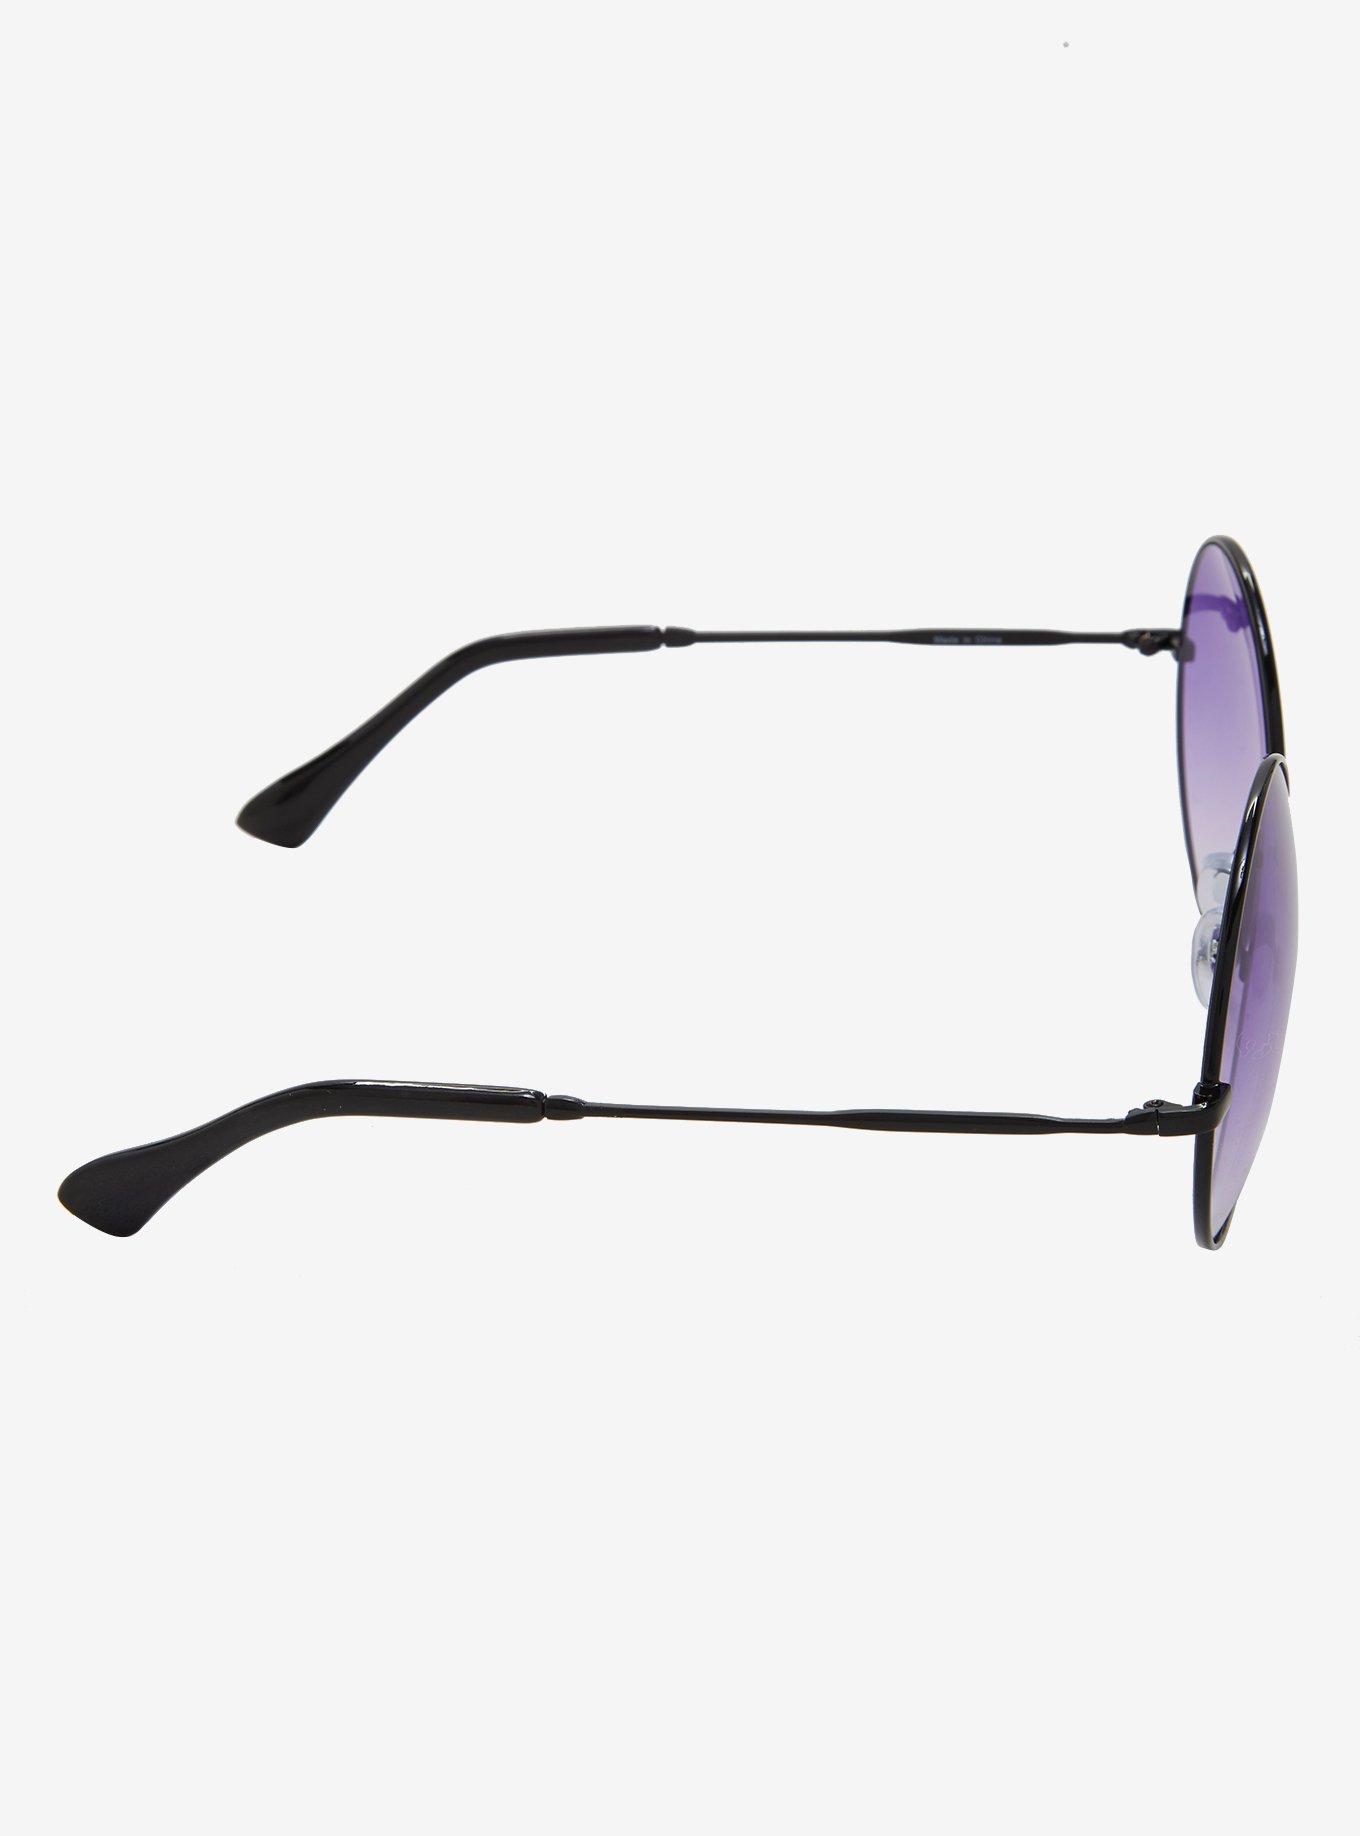 Purple & Black Round Sunglasses, , alternate